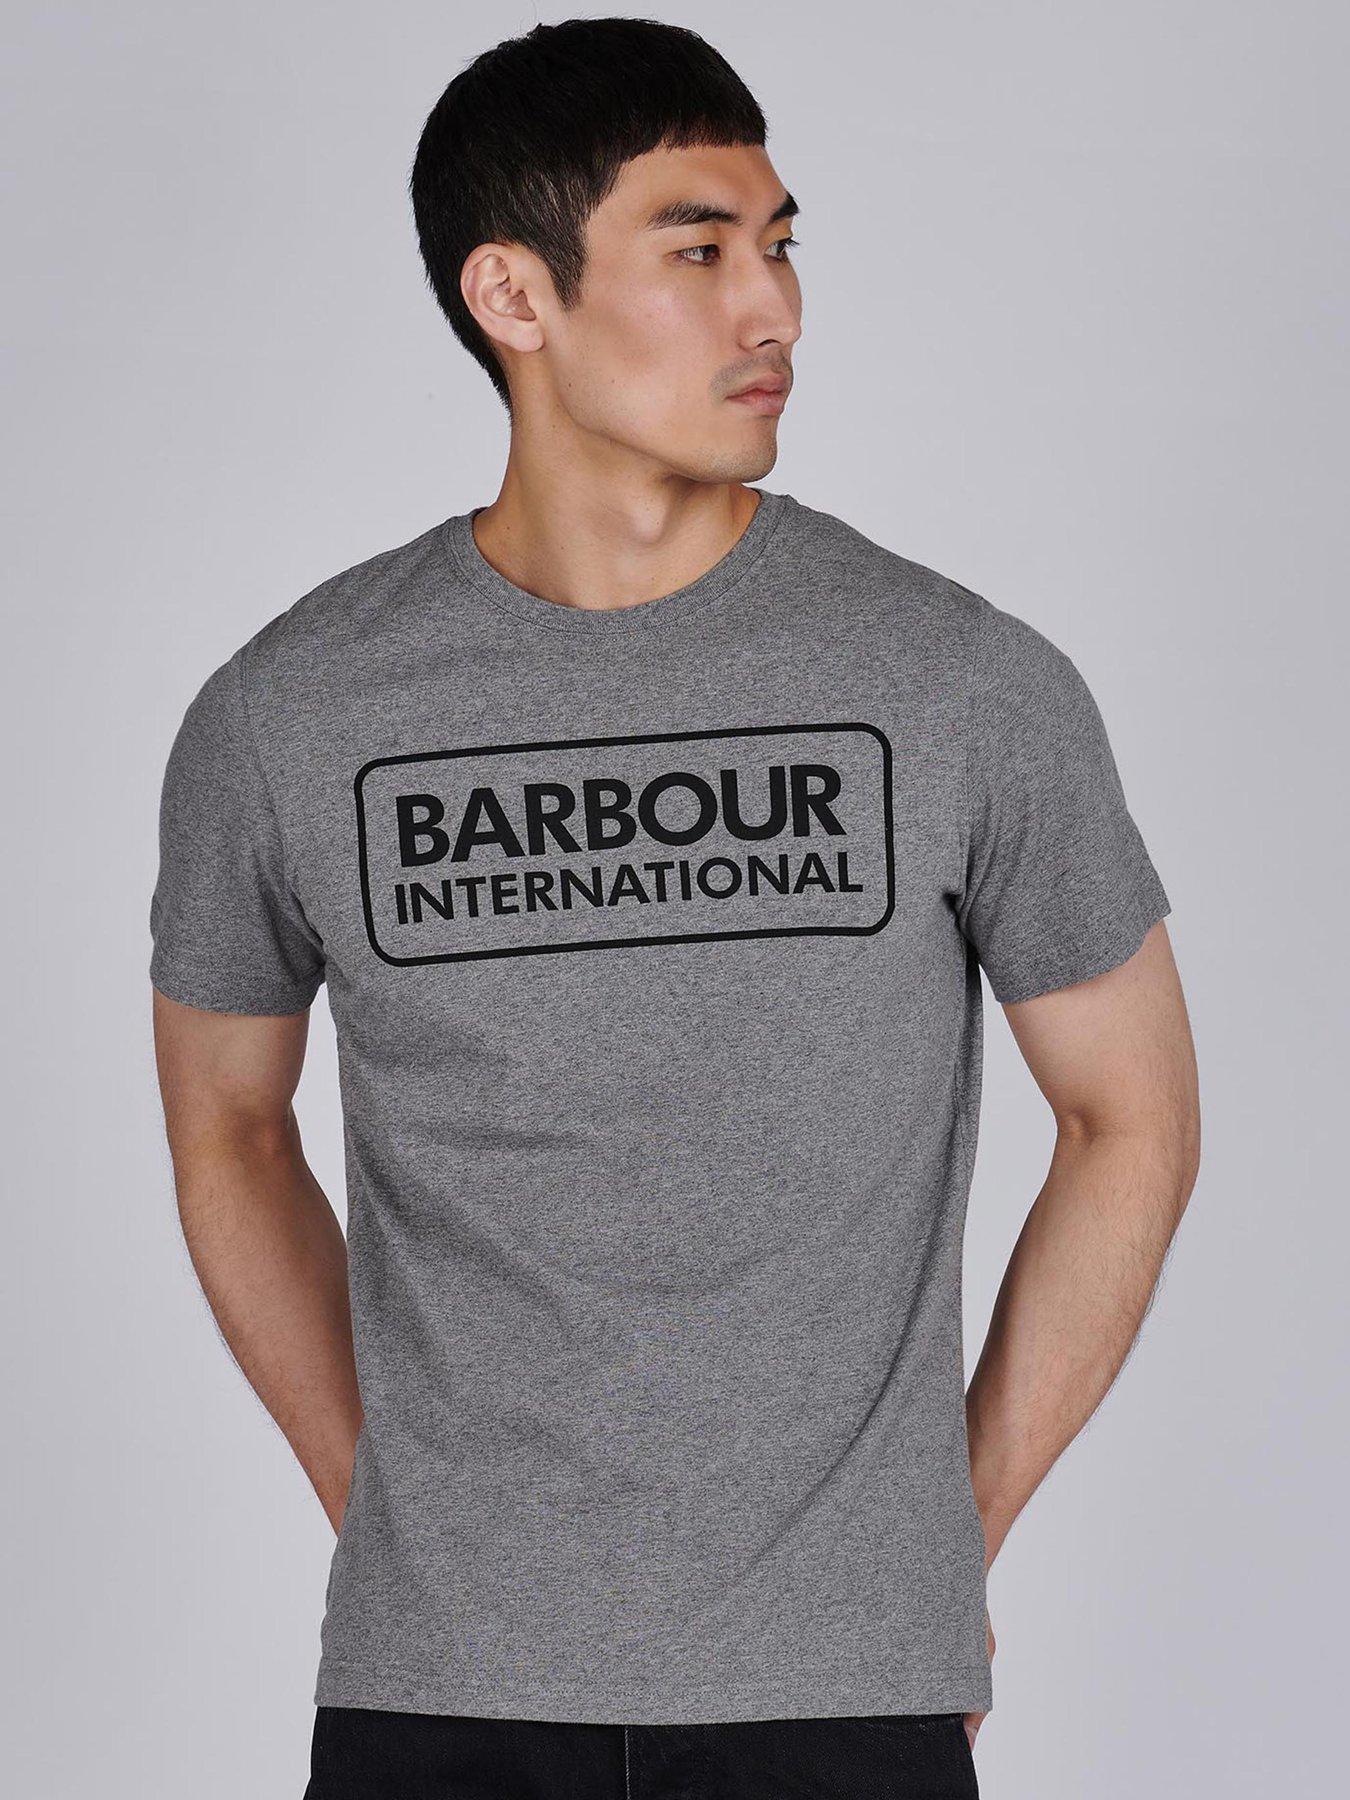 barbour international mens t shirt